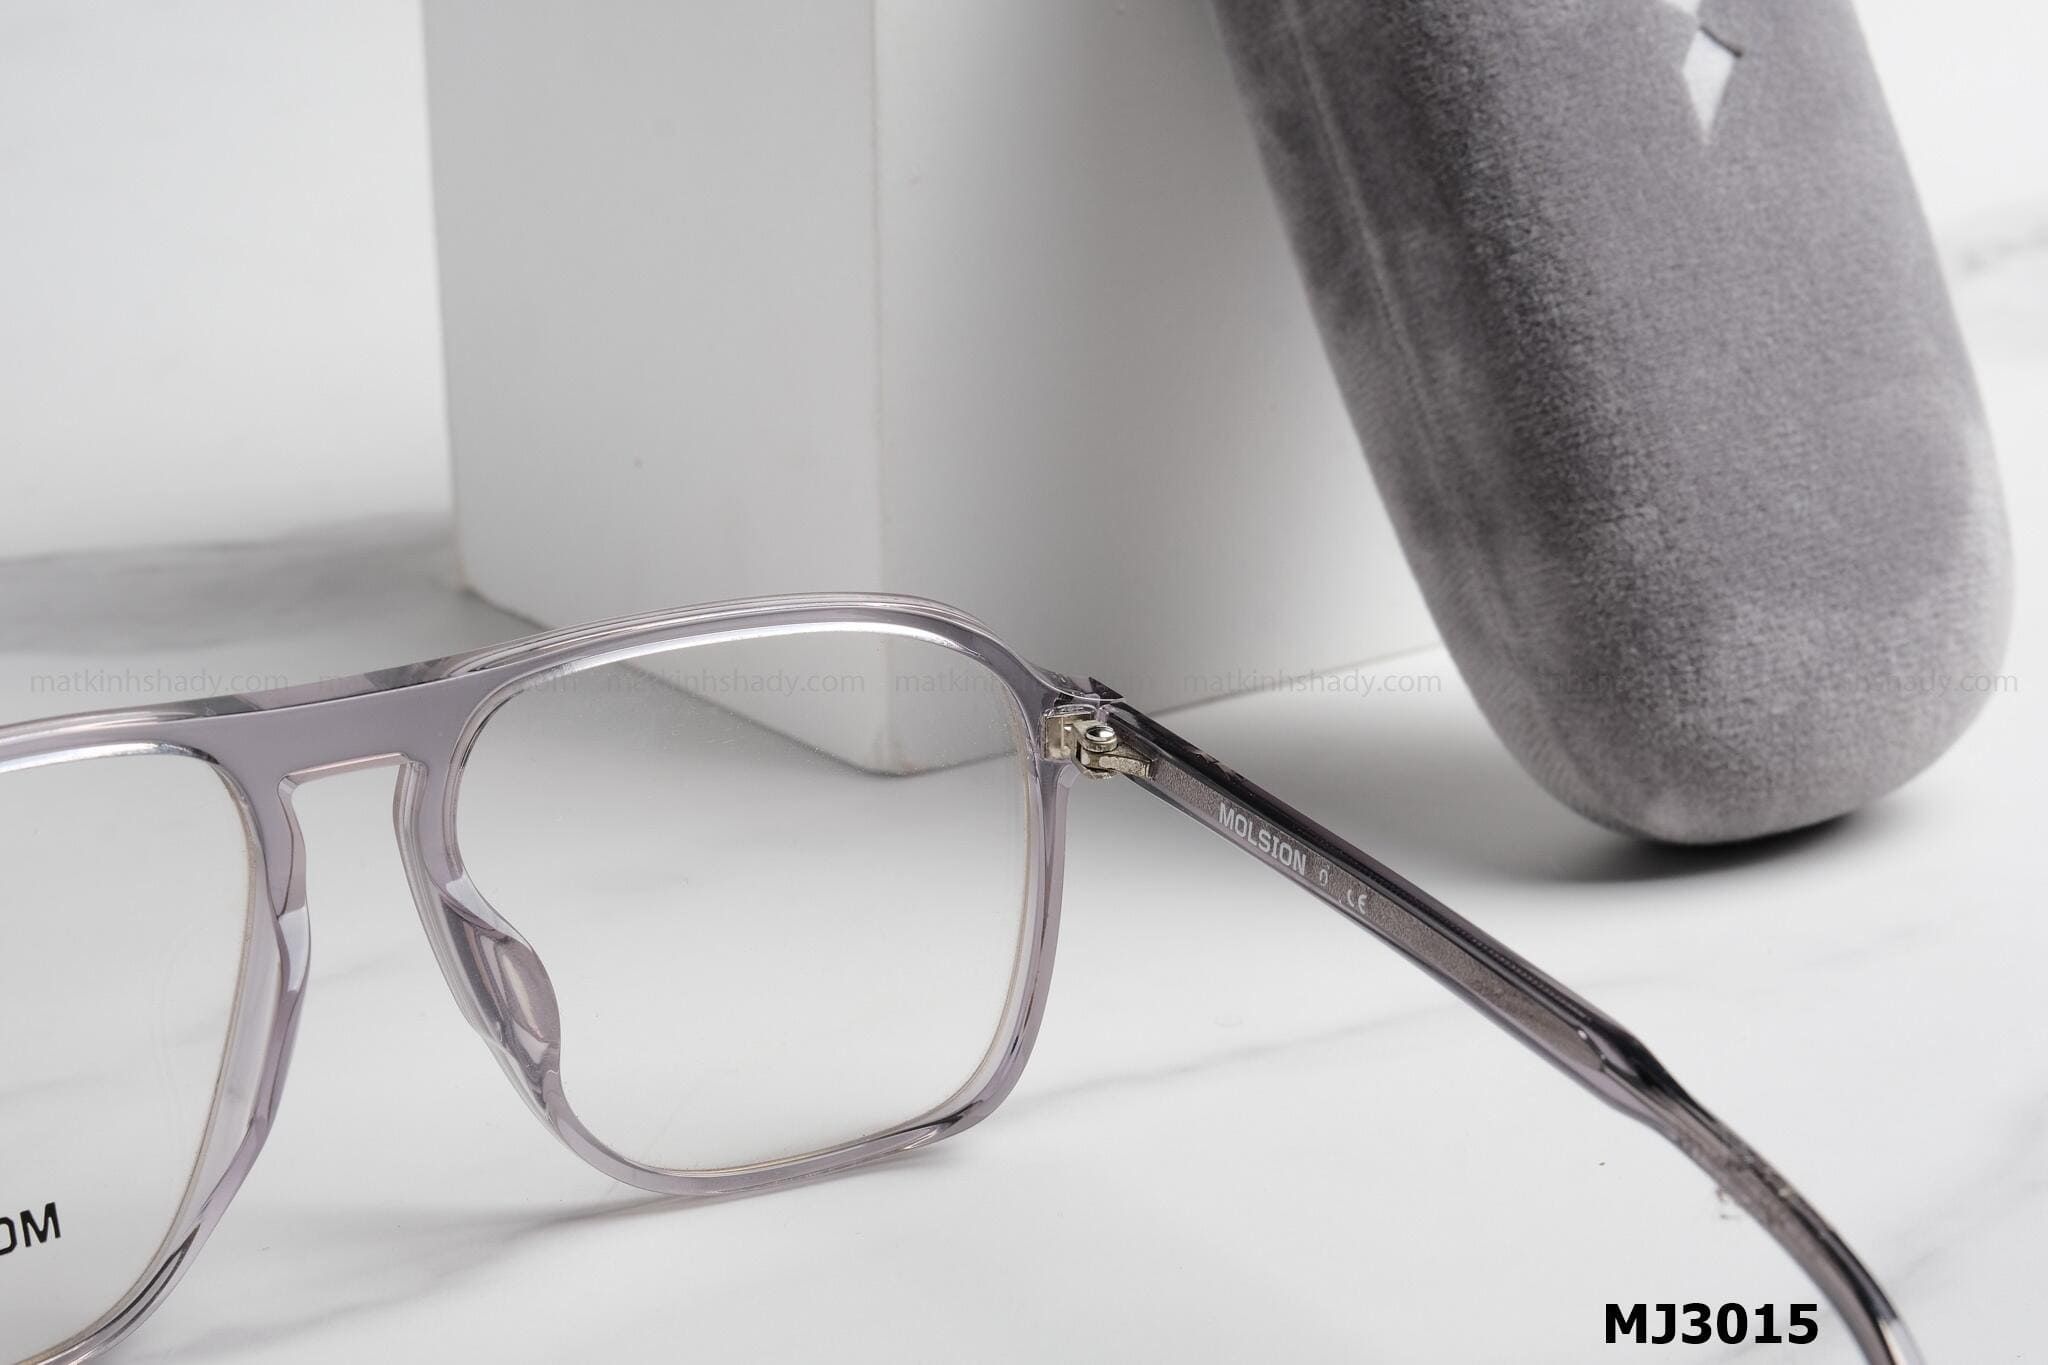  Molsion Eyewear - Glasses - MJ3015 